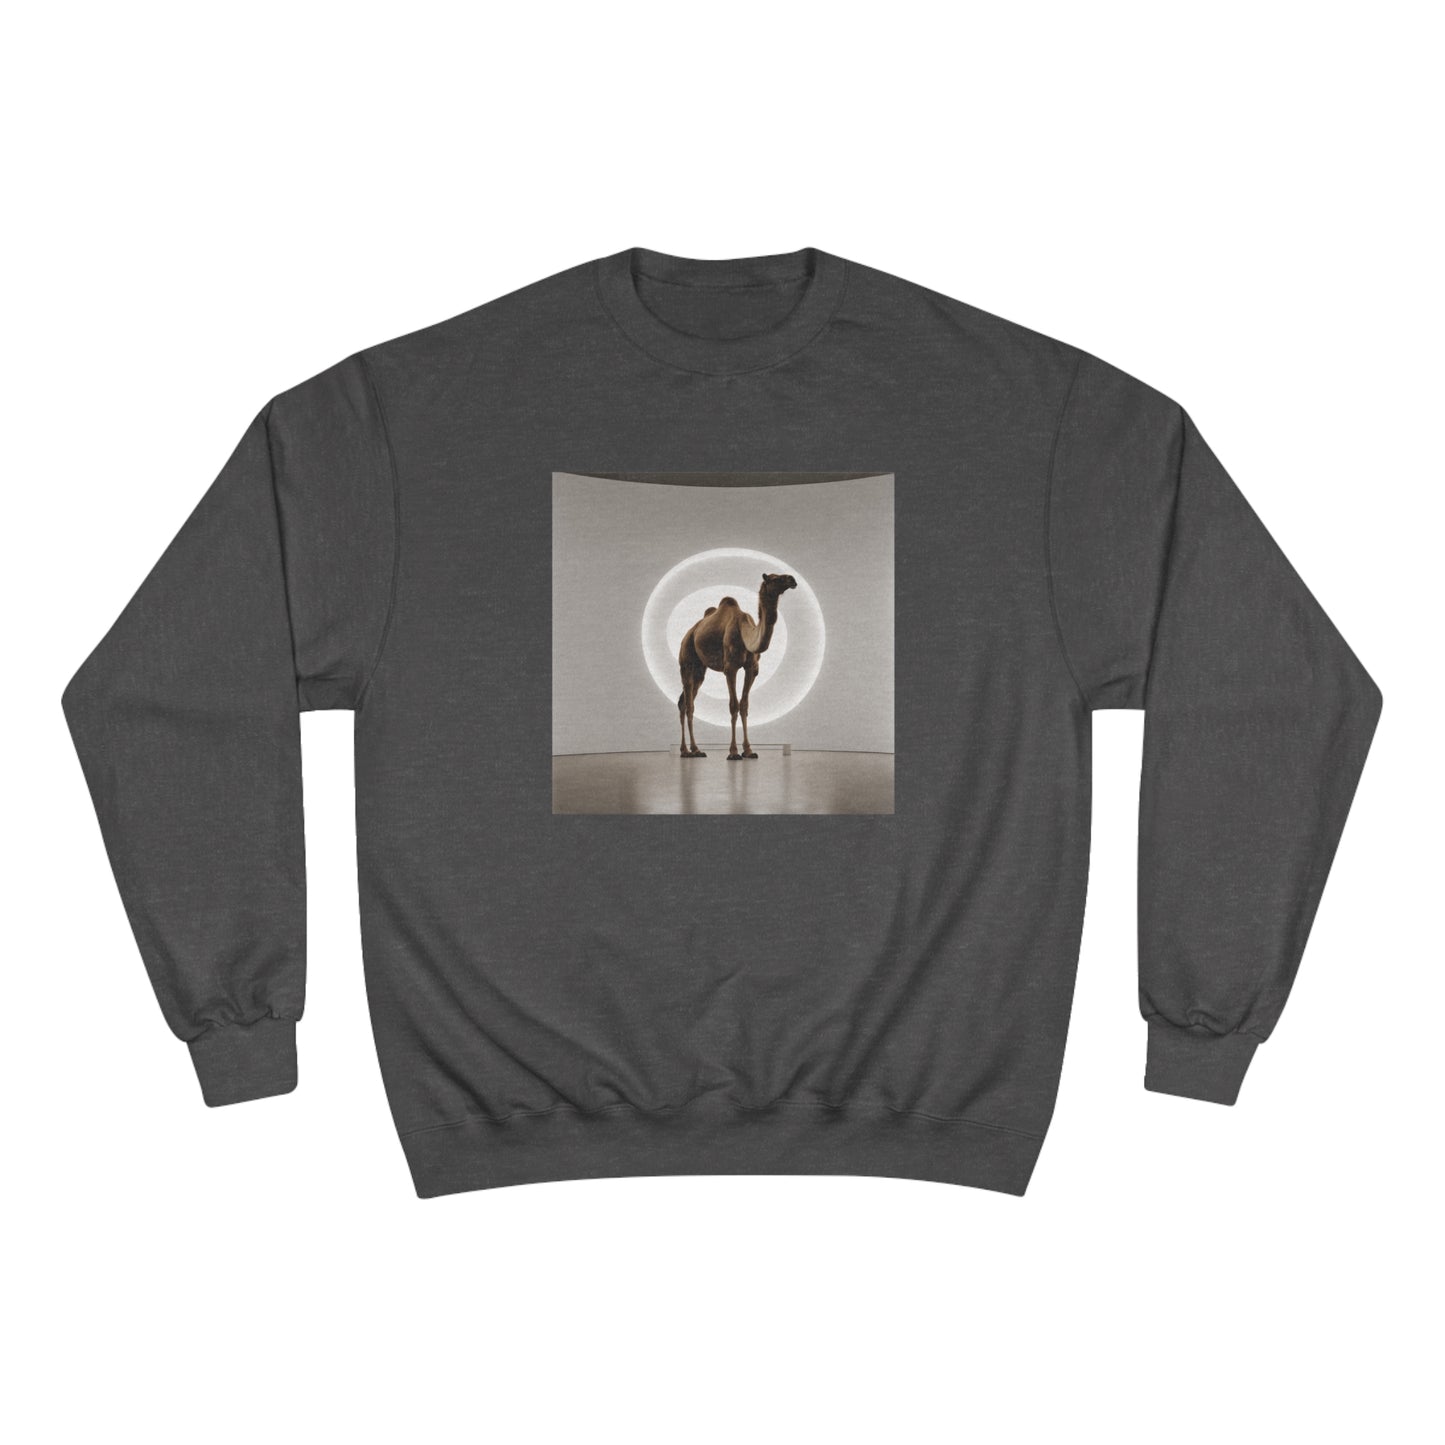 The Camel Champion Sweatshirt